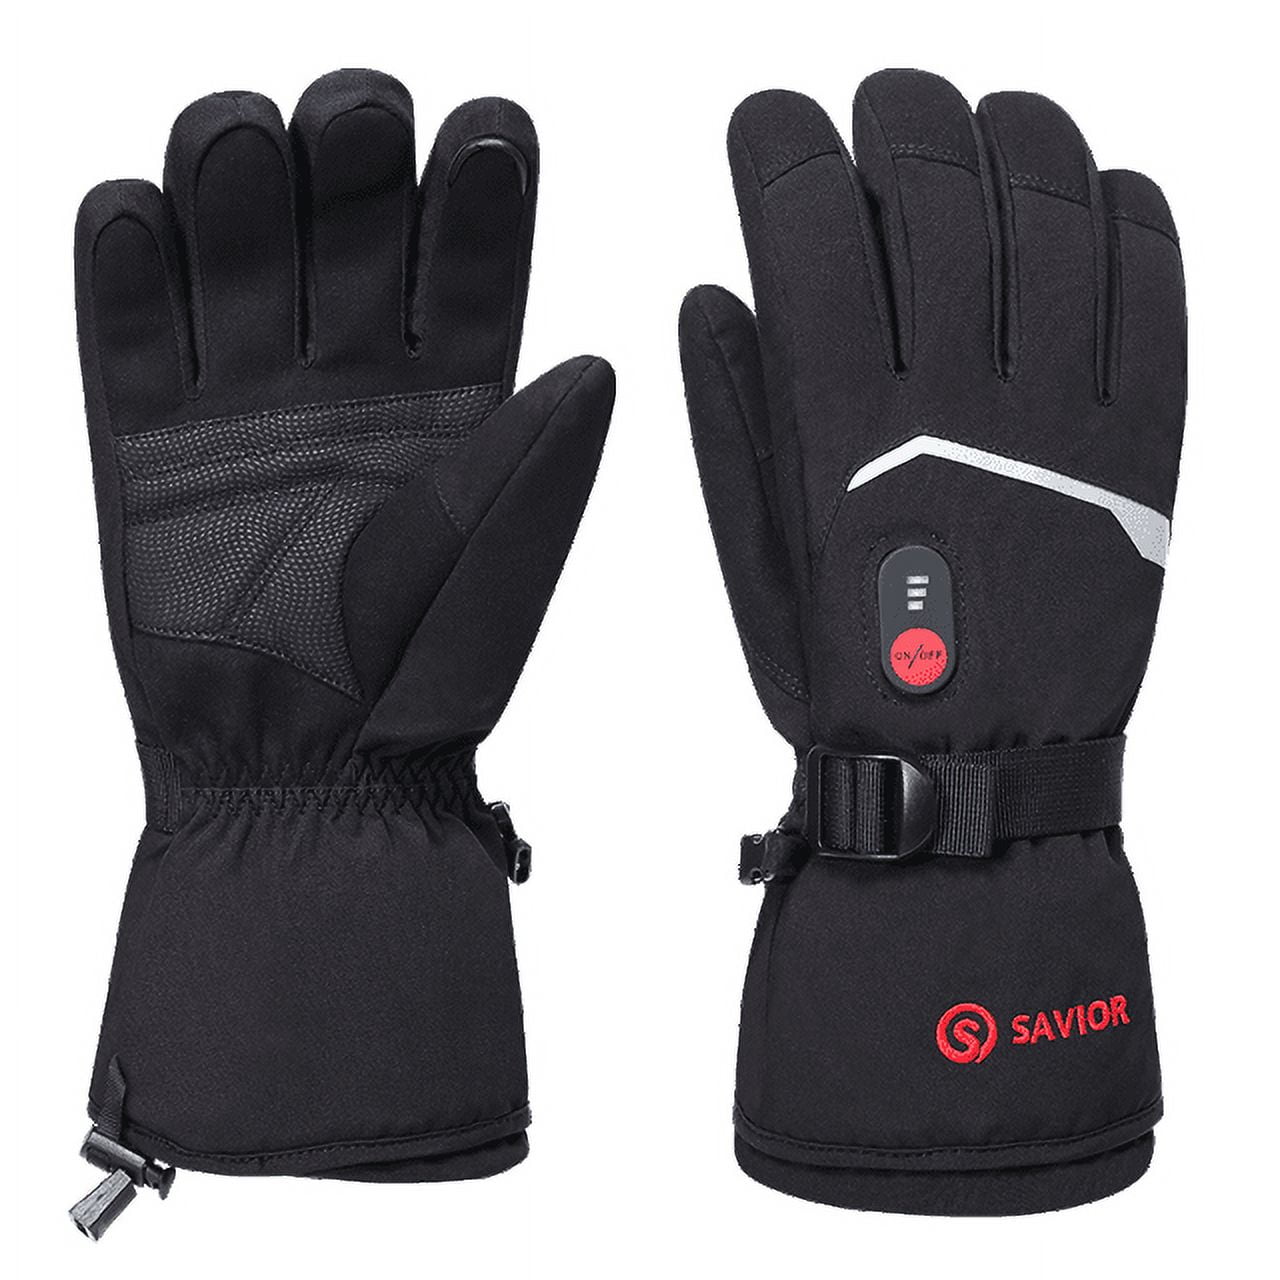 Savior Heat Heat Winter Heated Gloves Mittens For Men Women Keep